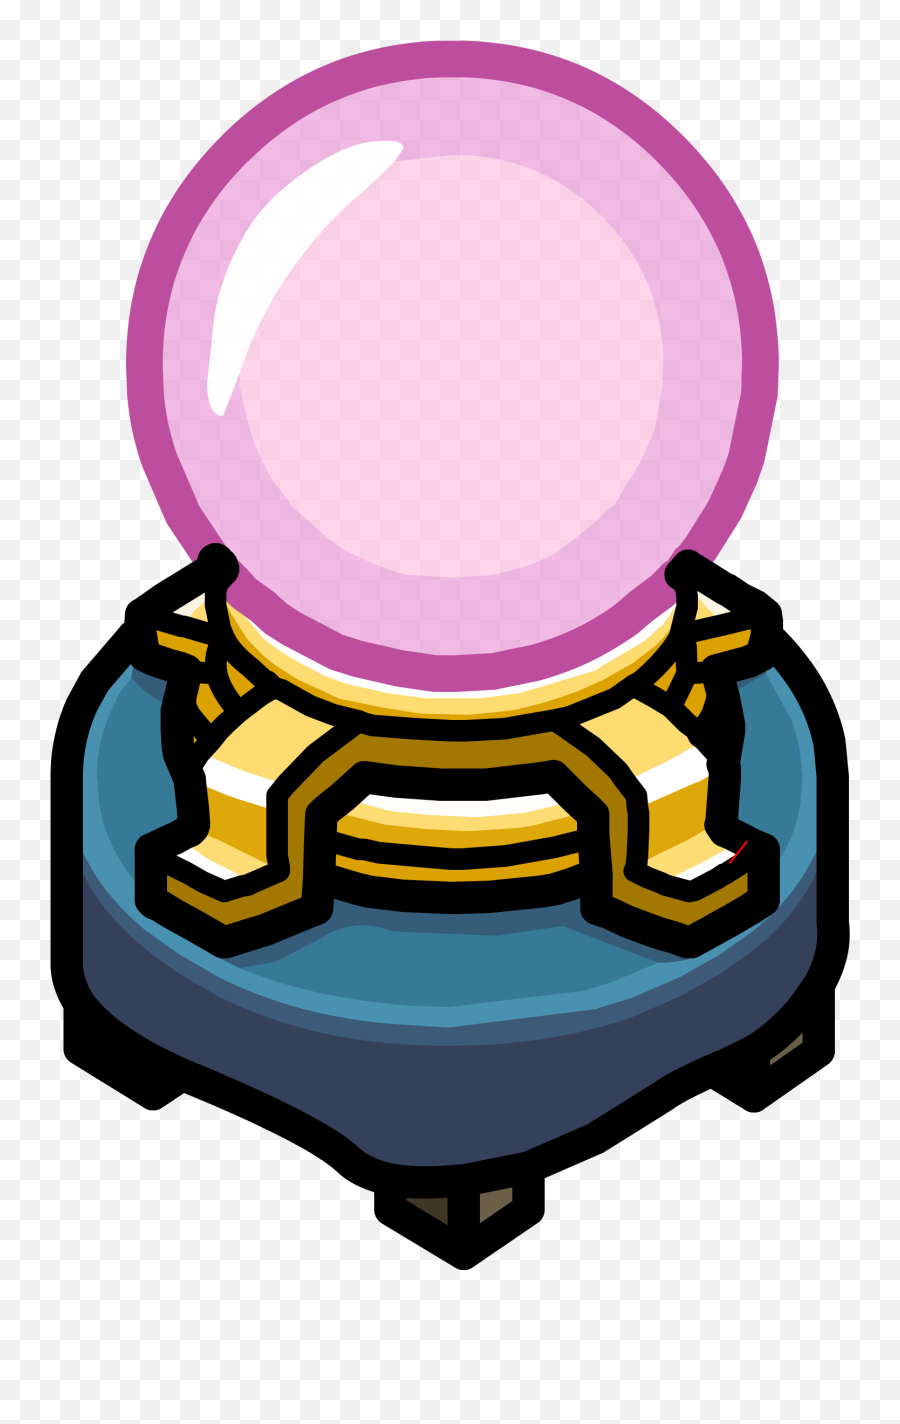 Download Magic Crystal Ball Icon - Magical Crystal Ball Clipcart Emoji,Crystal Ball Transparent Background